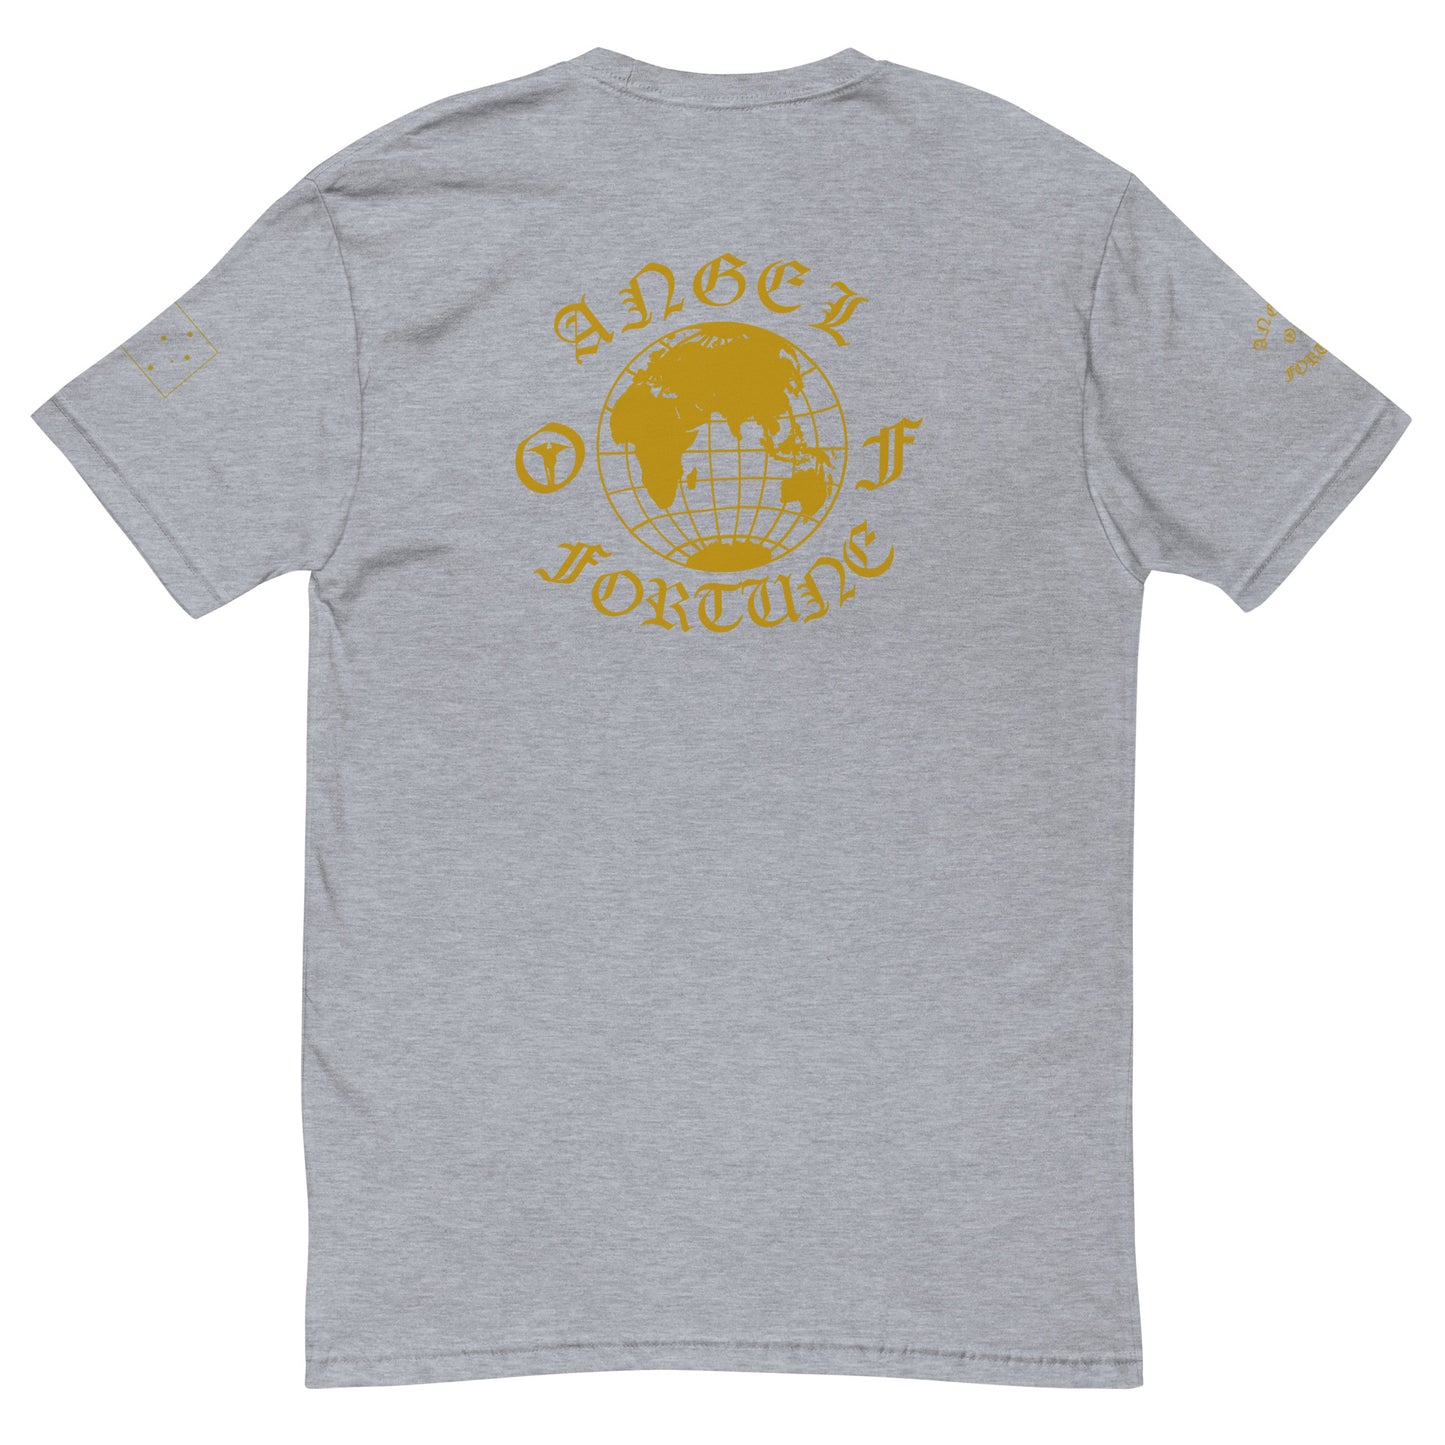 Gold Angel Global Short Sleeve T-shirt